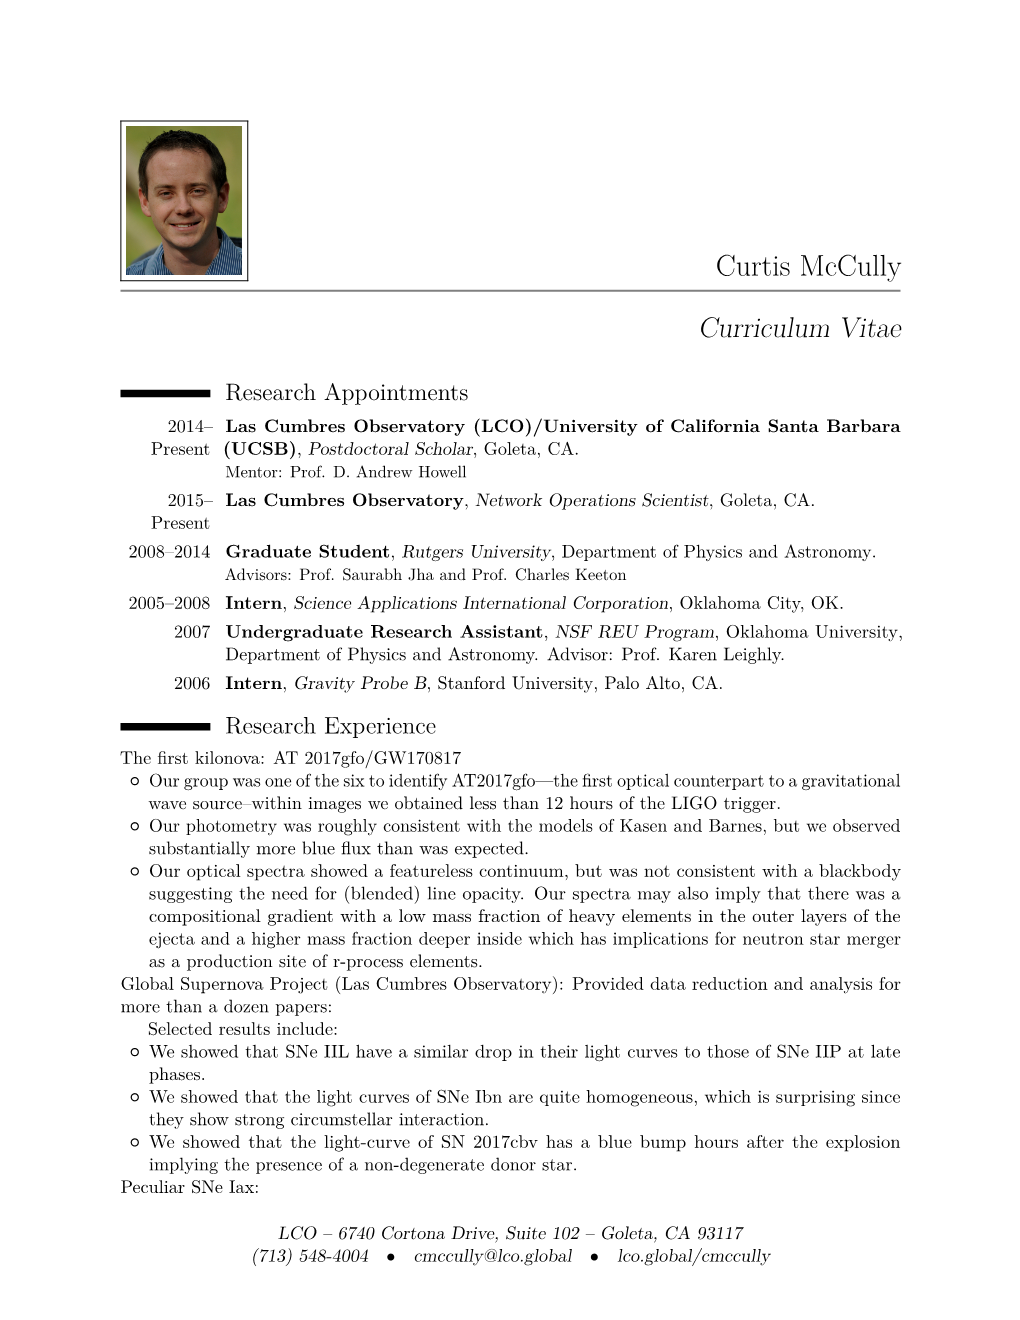 Curtis Mccully – Curriculum Vitae